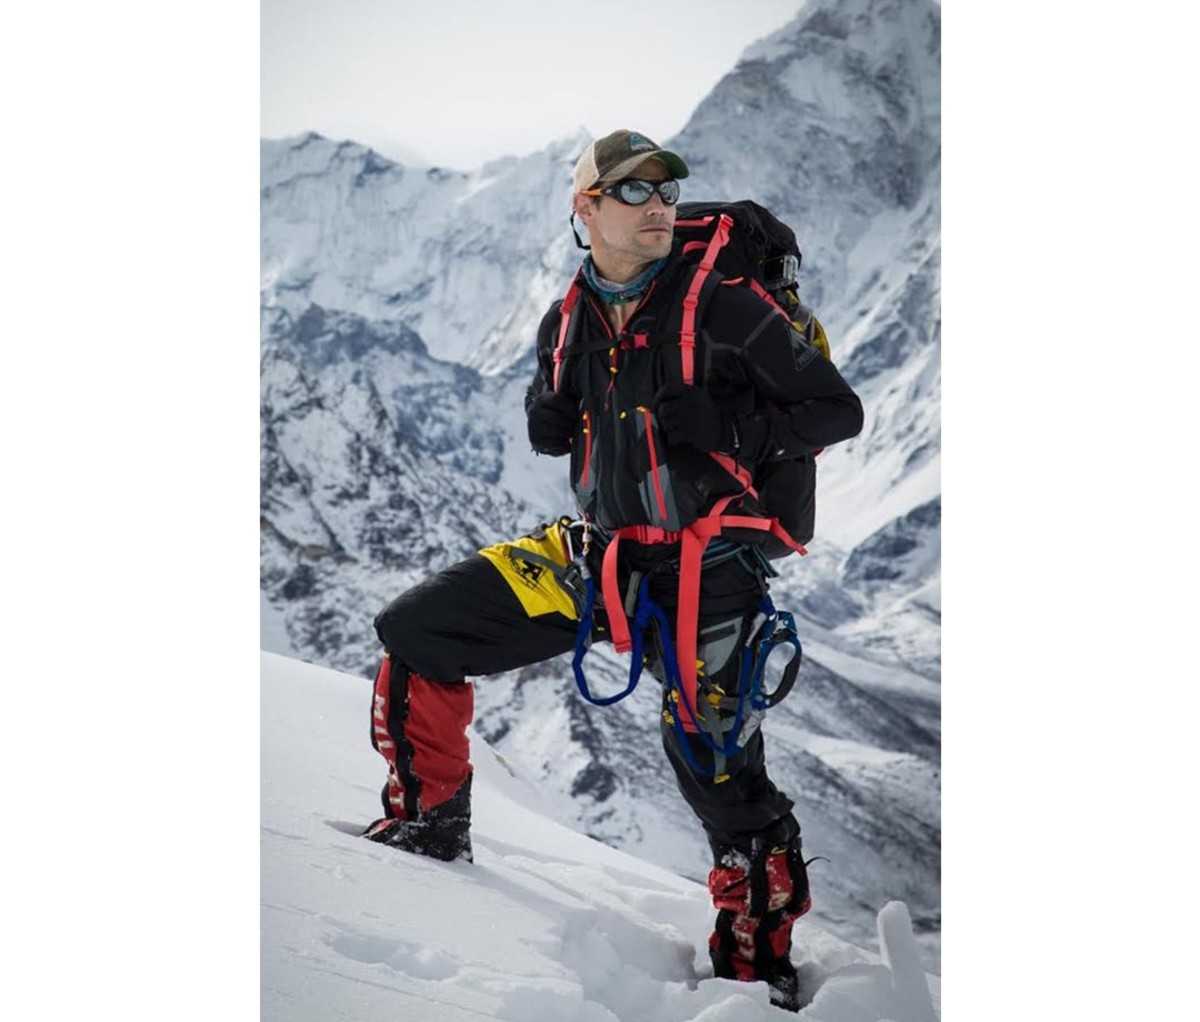 Elia Saikaly climbing Mt. Everest